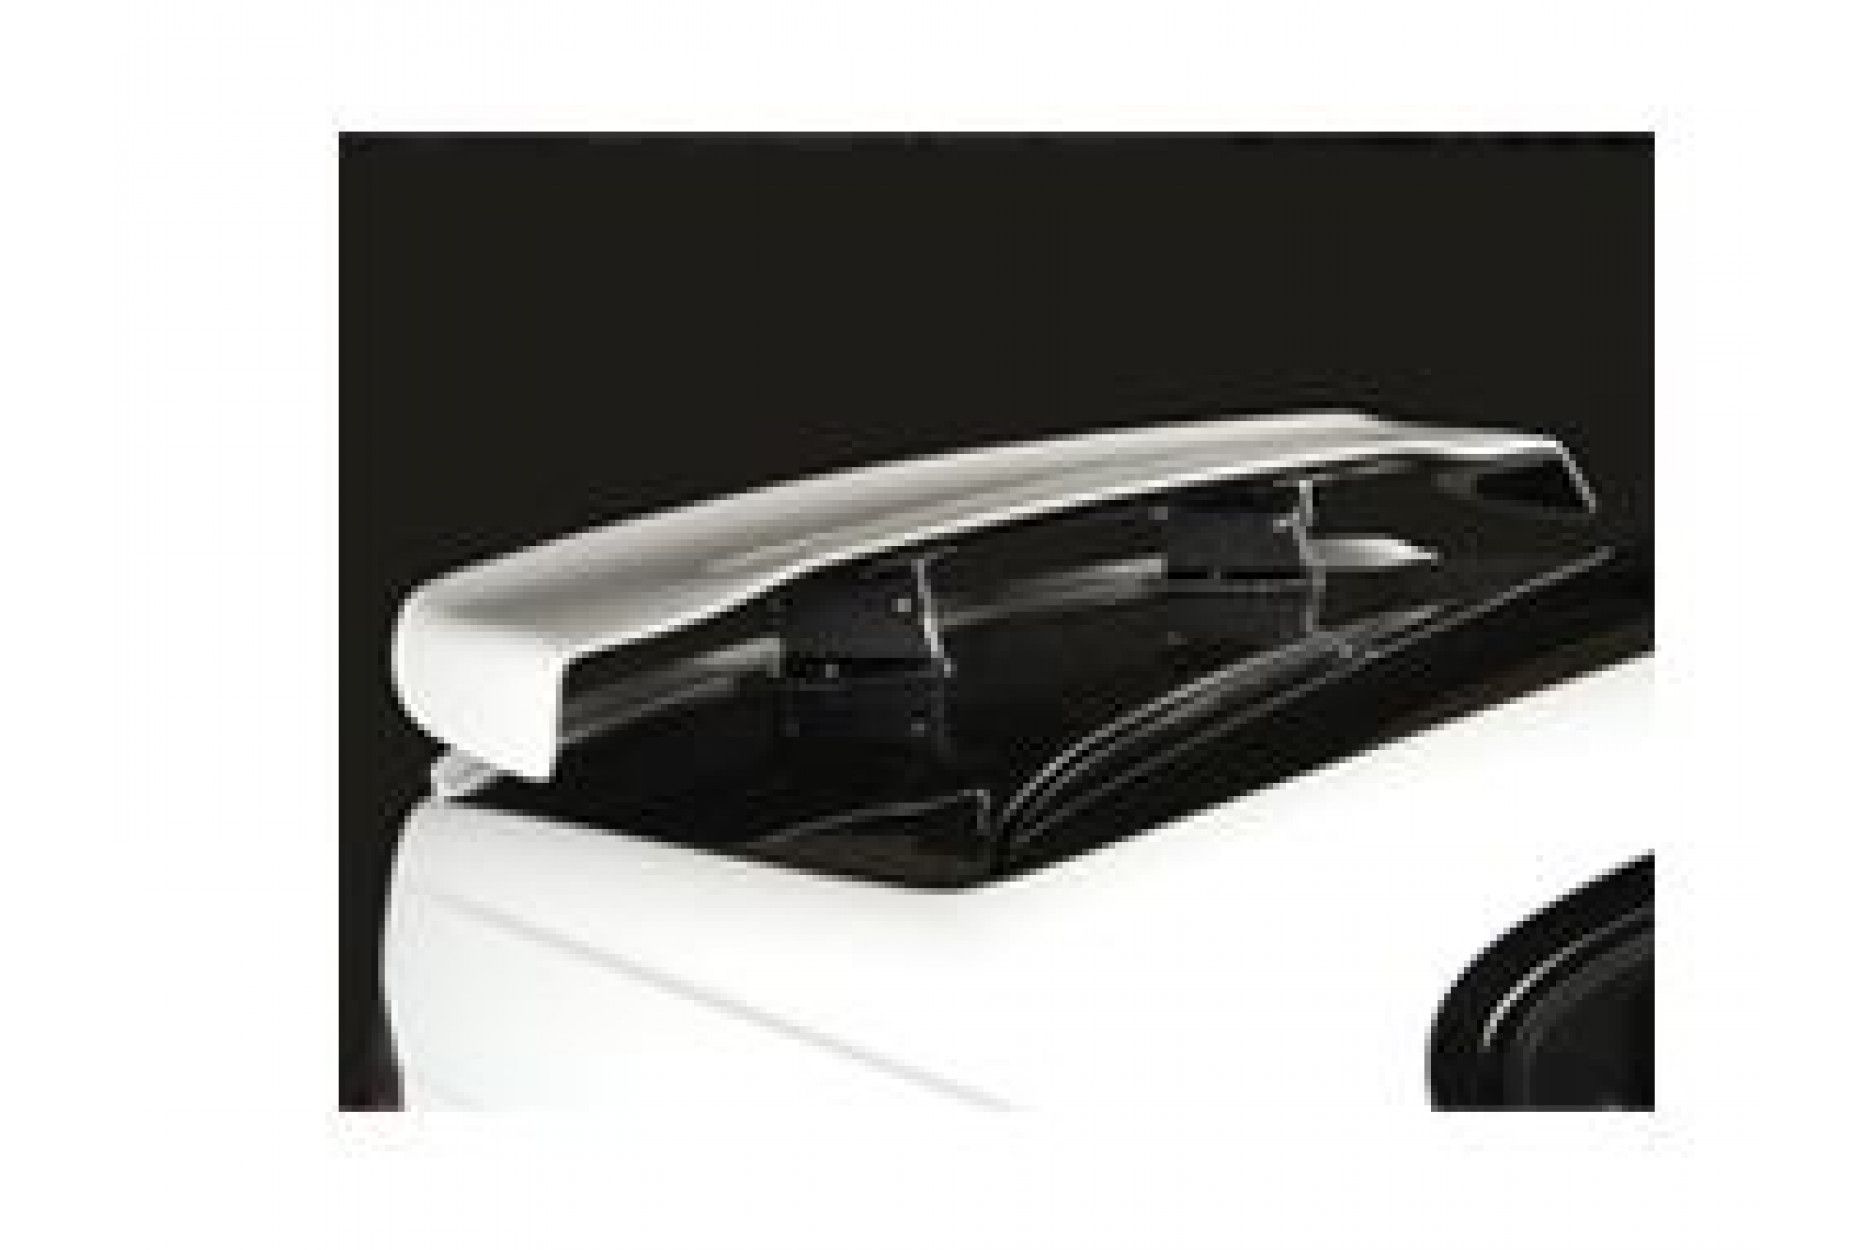 Varis Heckflügel GT für BMW E46 M3 - Hyper Narrow (Carbon)